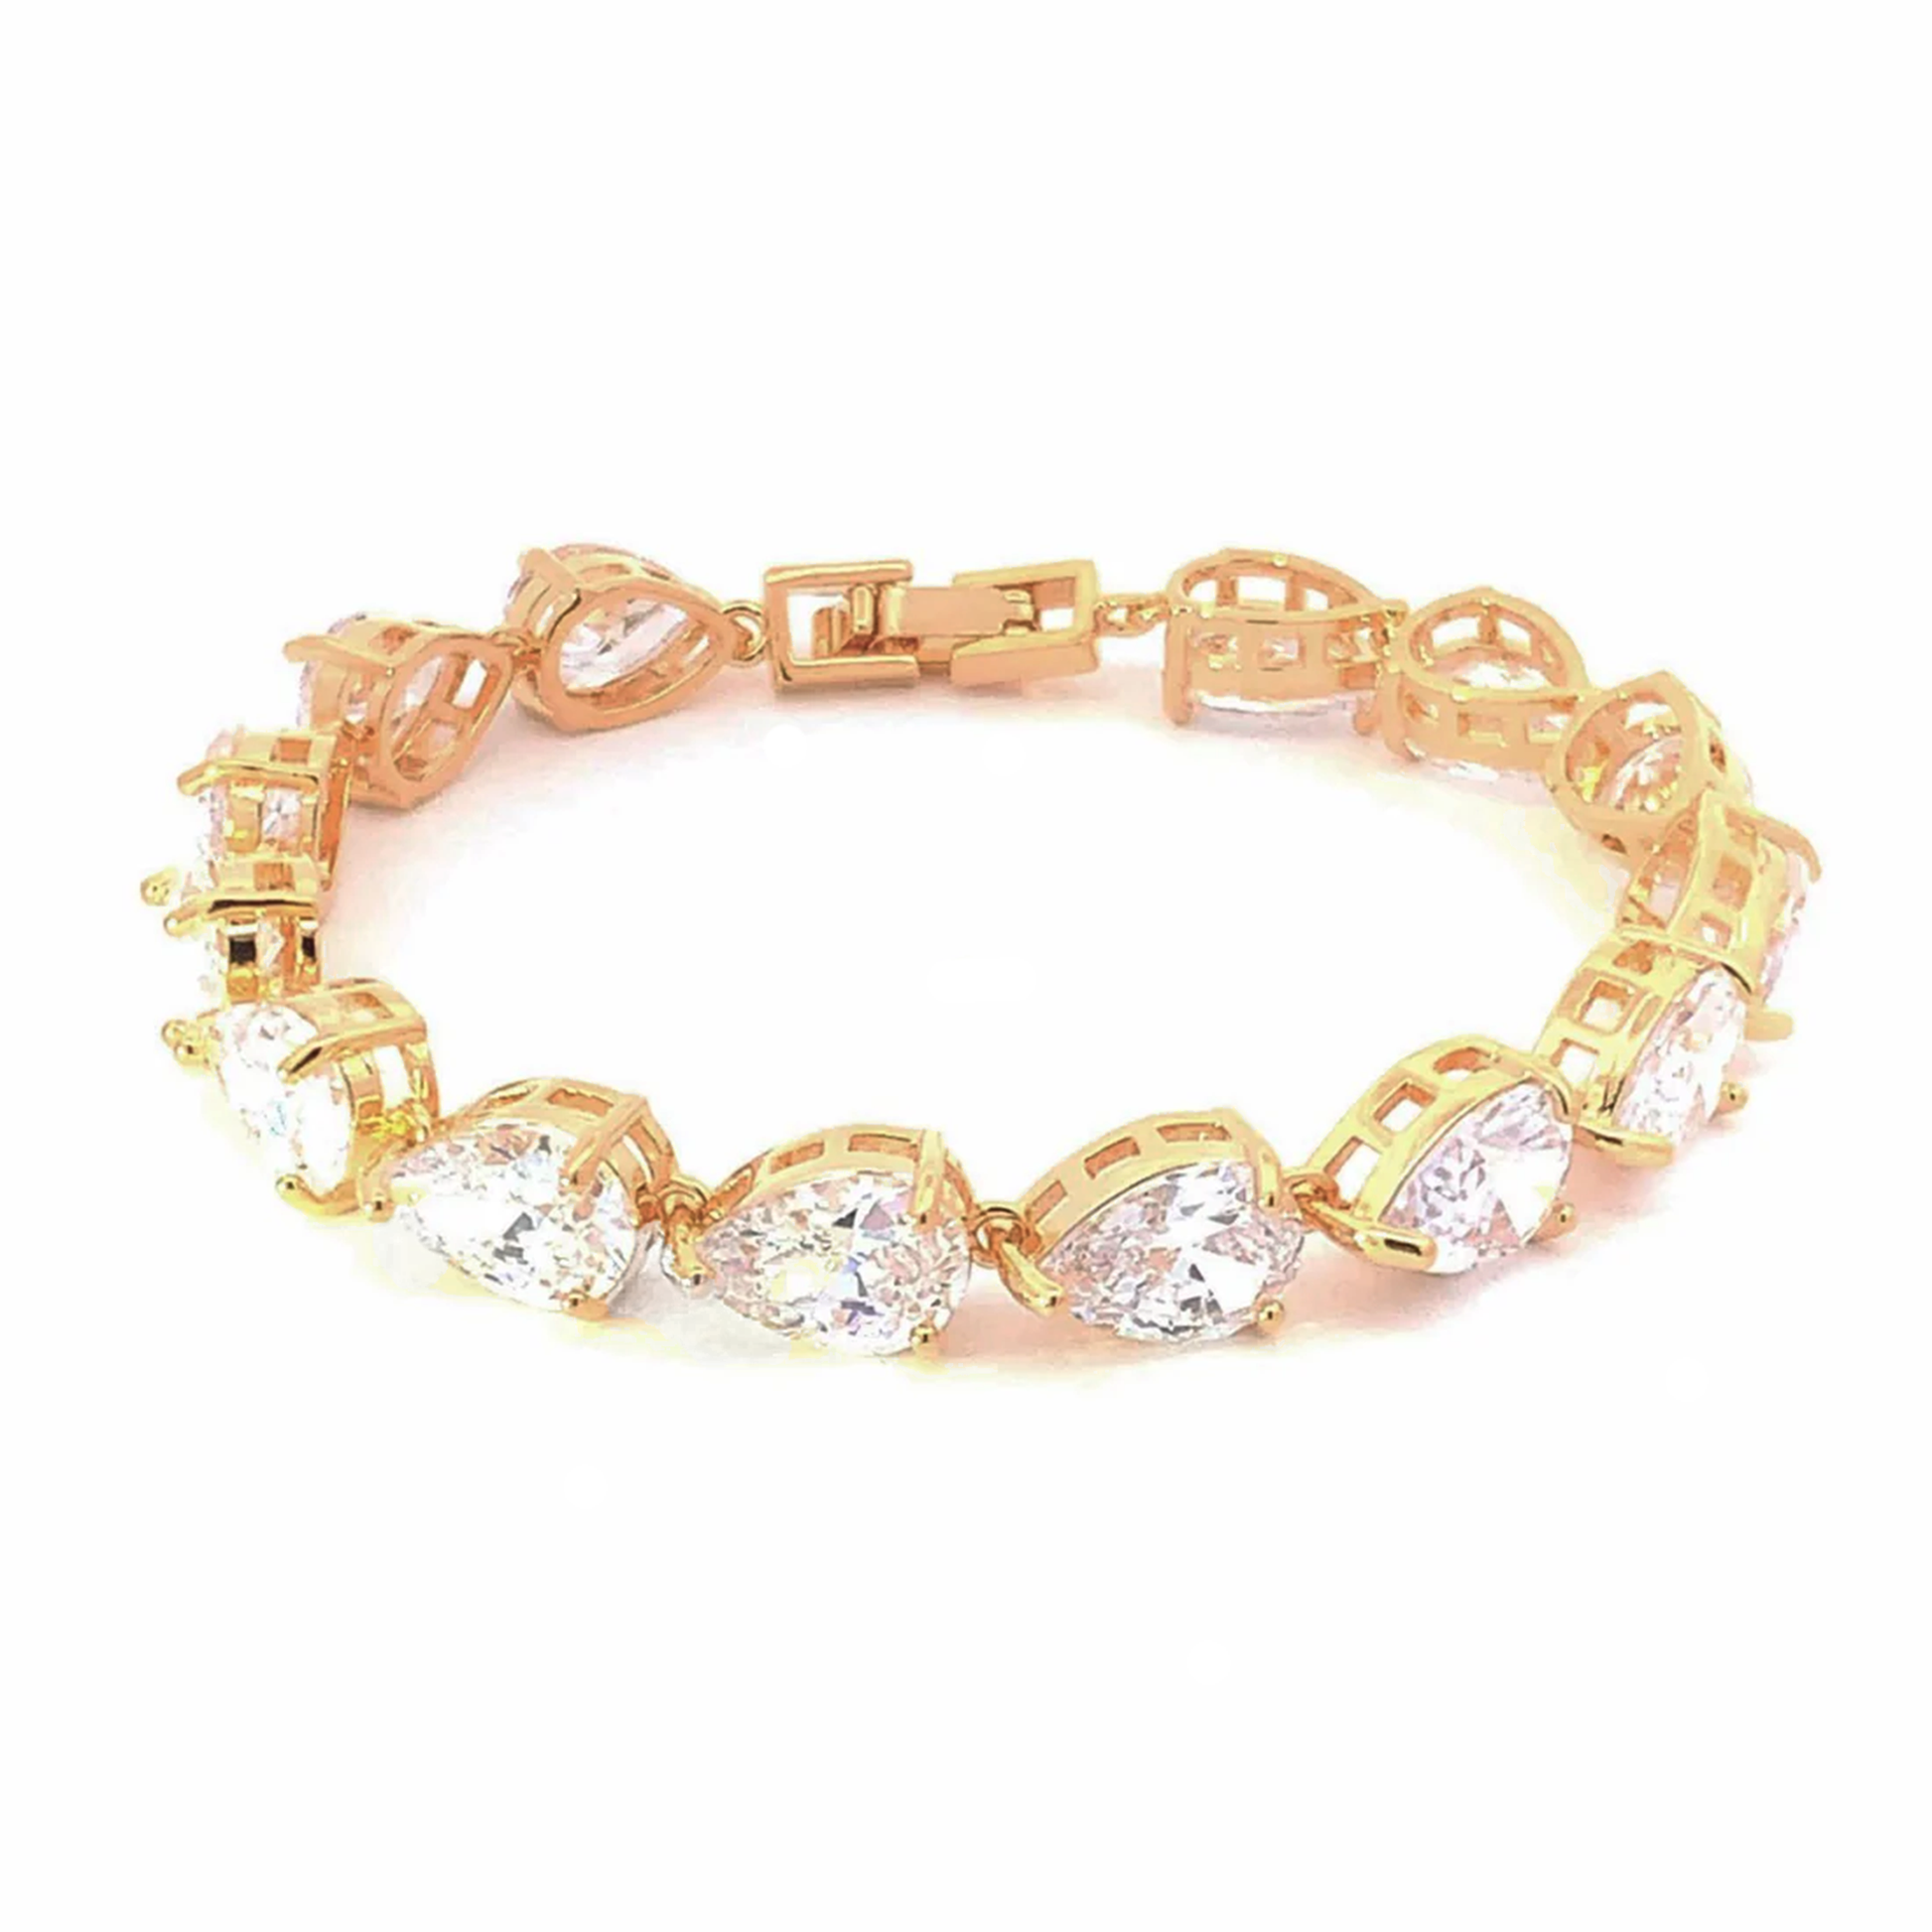 Bridal pear tennis bracelet gold